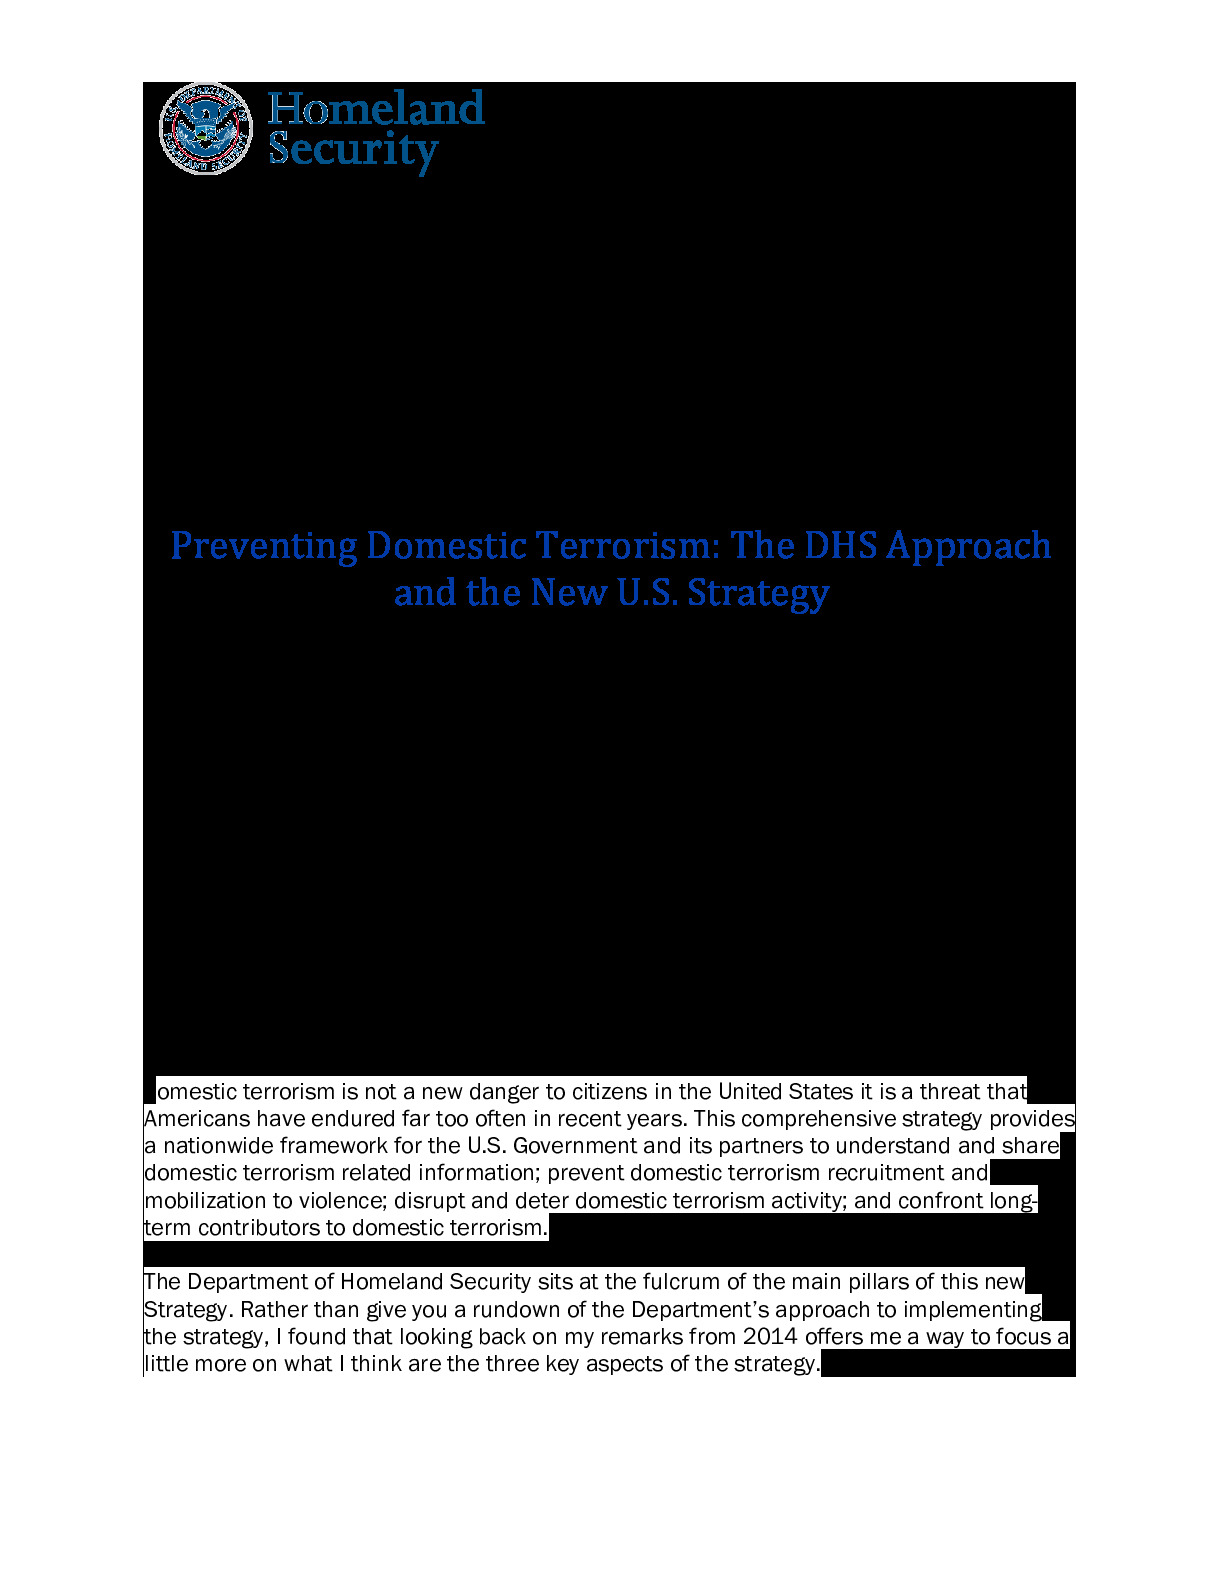 CohenStatement-20210623.pdf